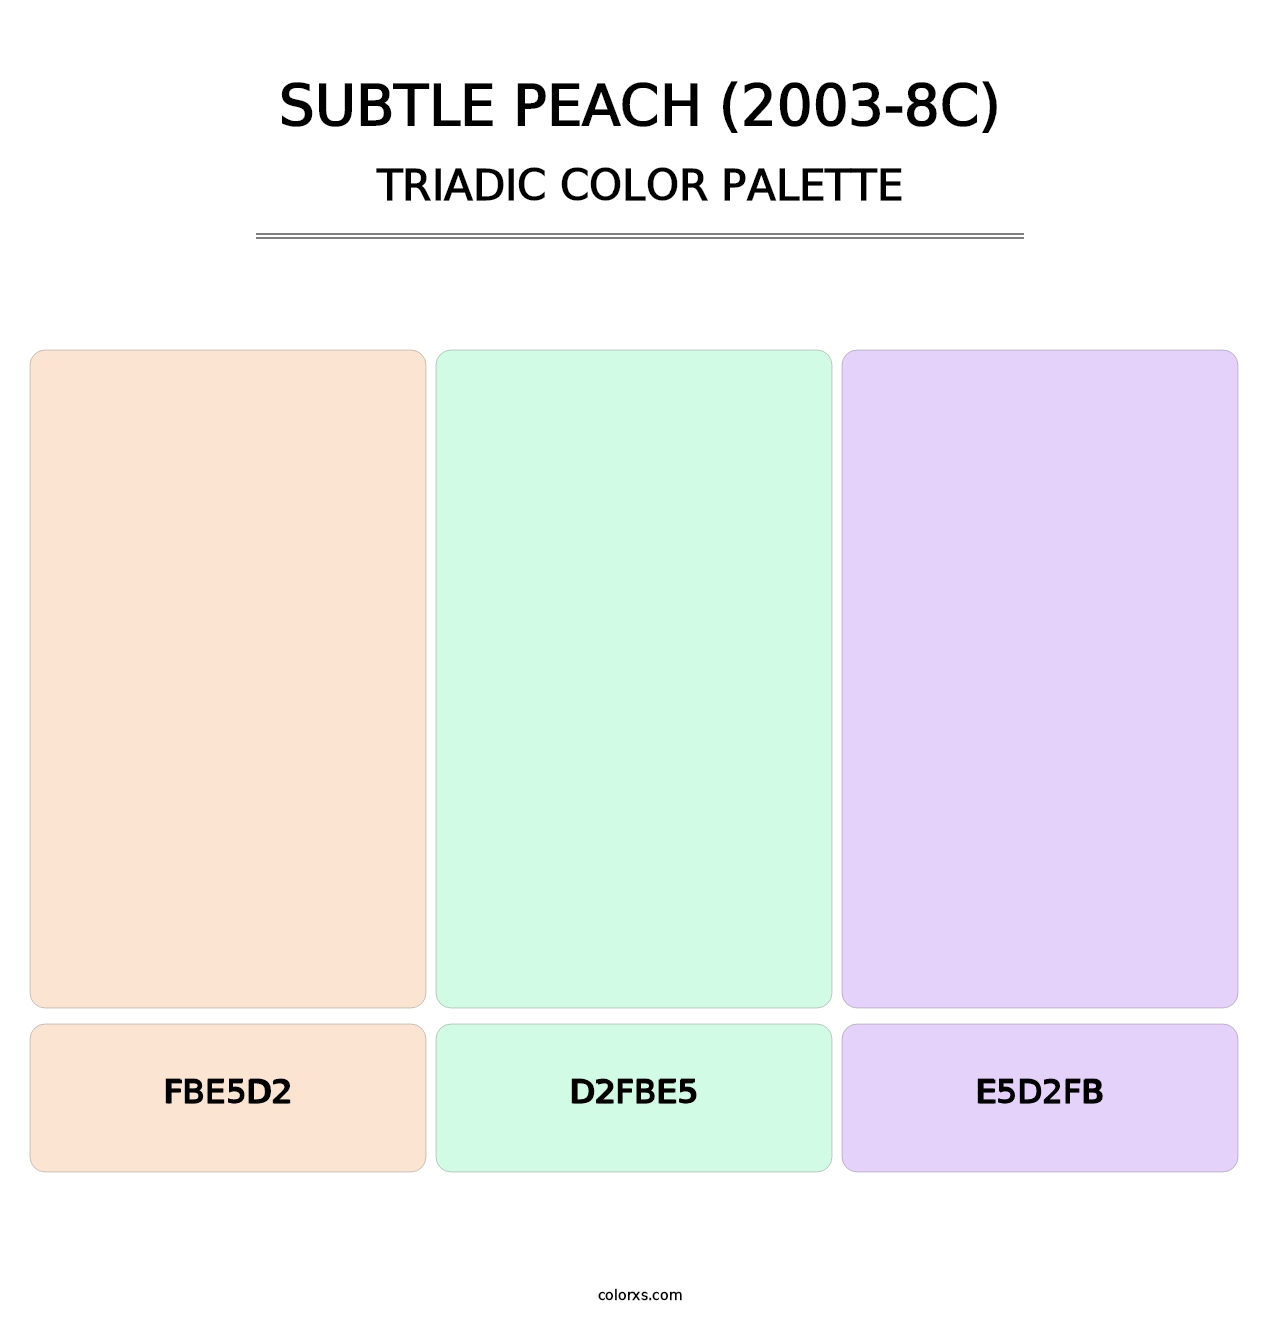 Subtle Peach (2003-8C) - Triadic Color Palette